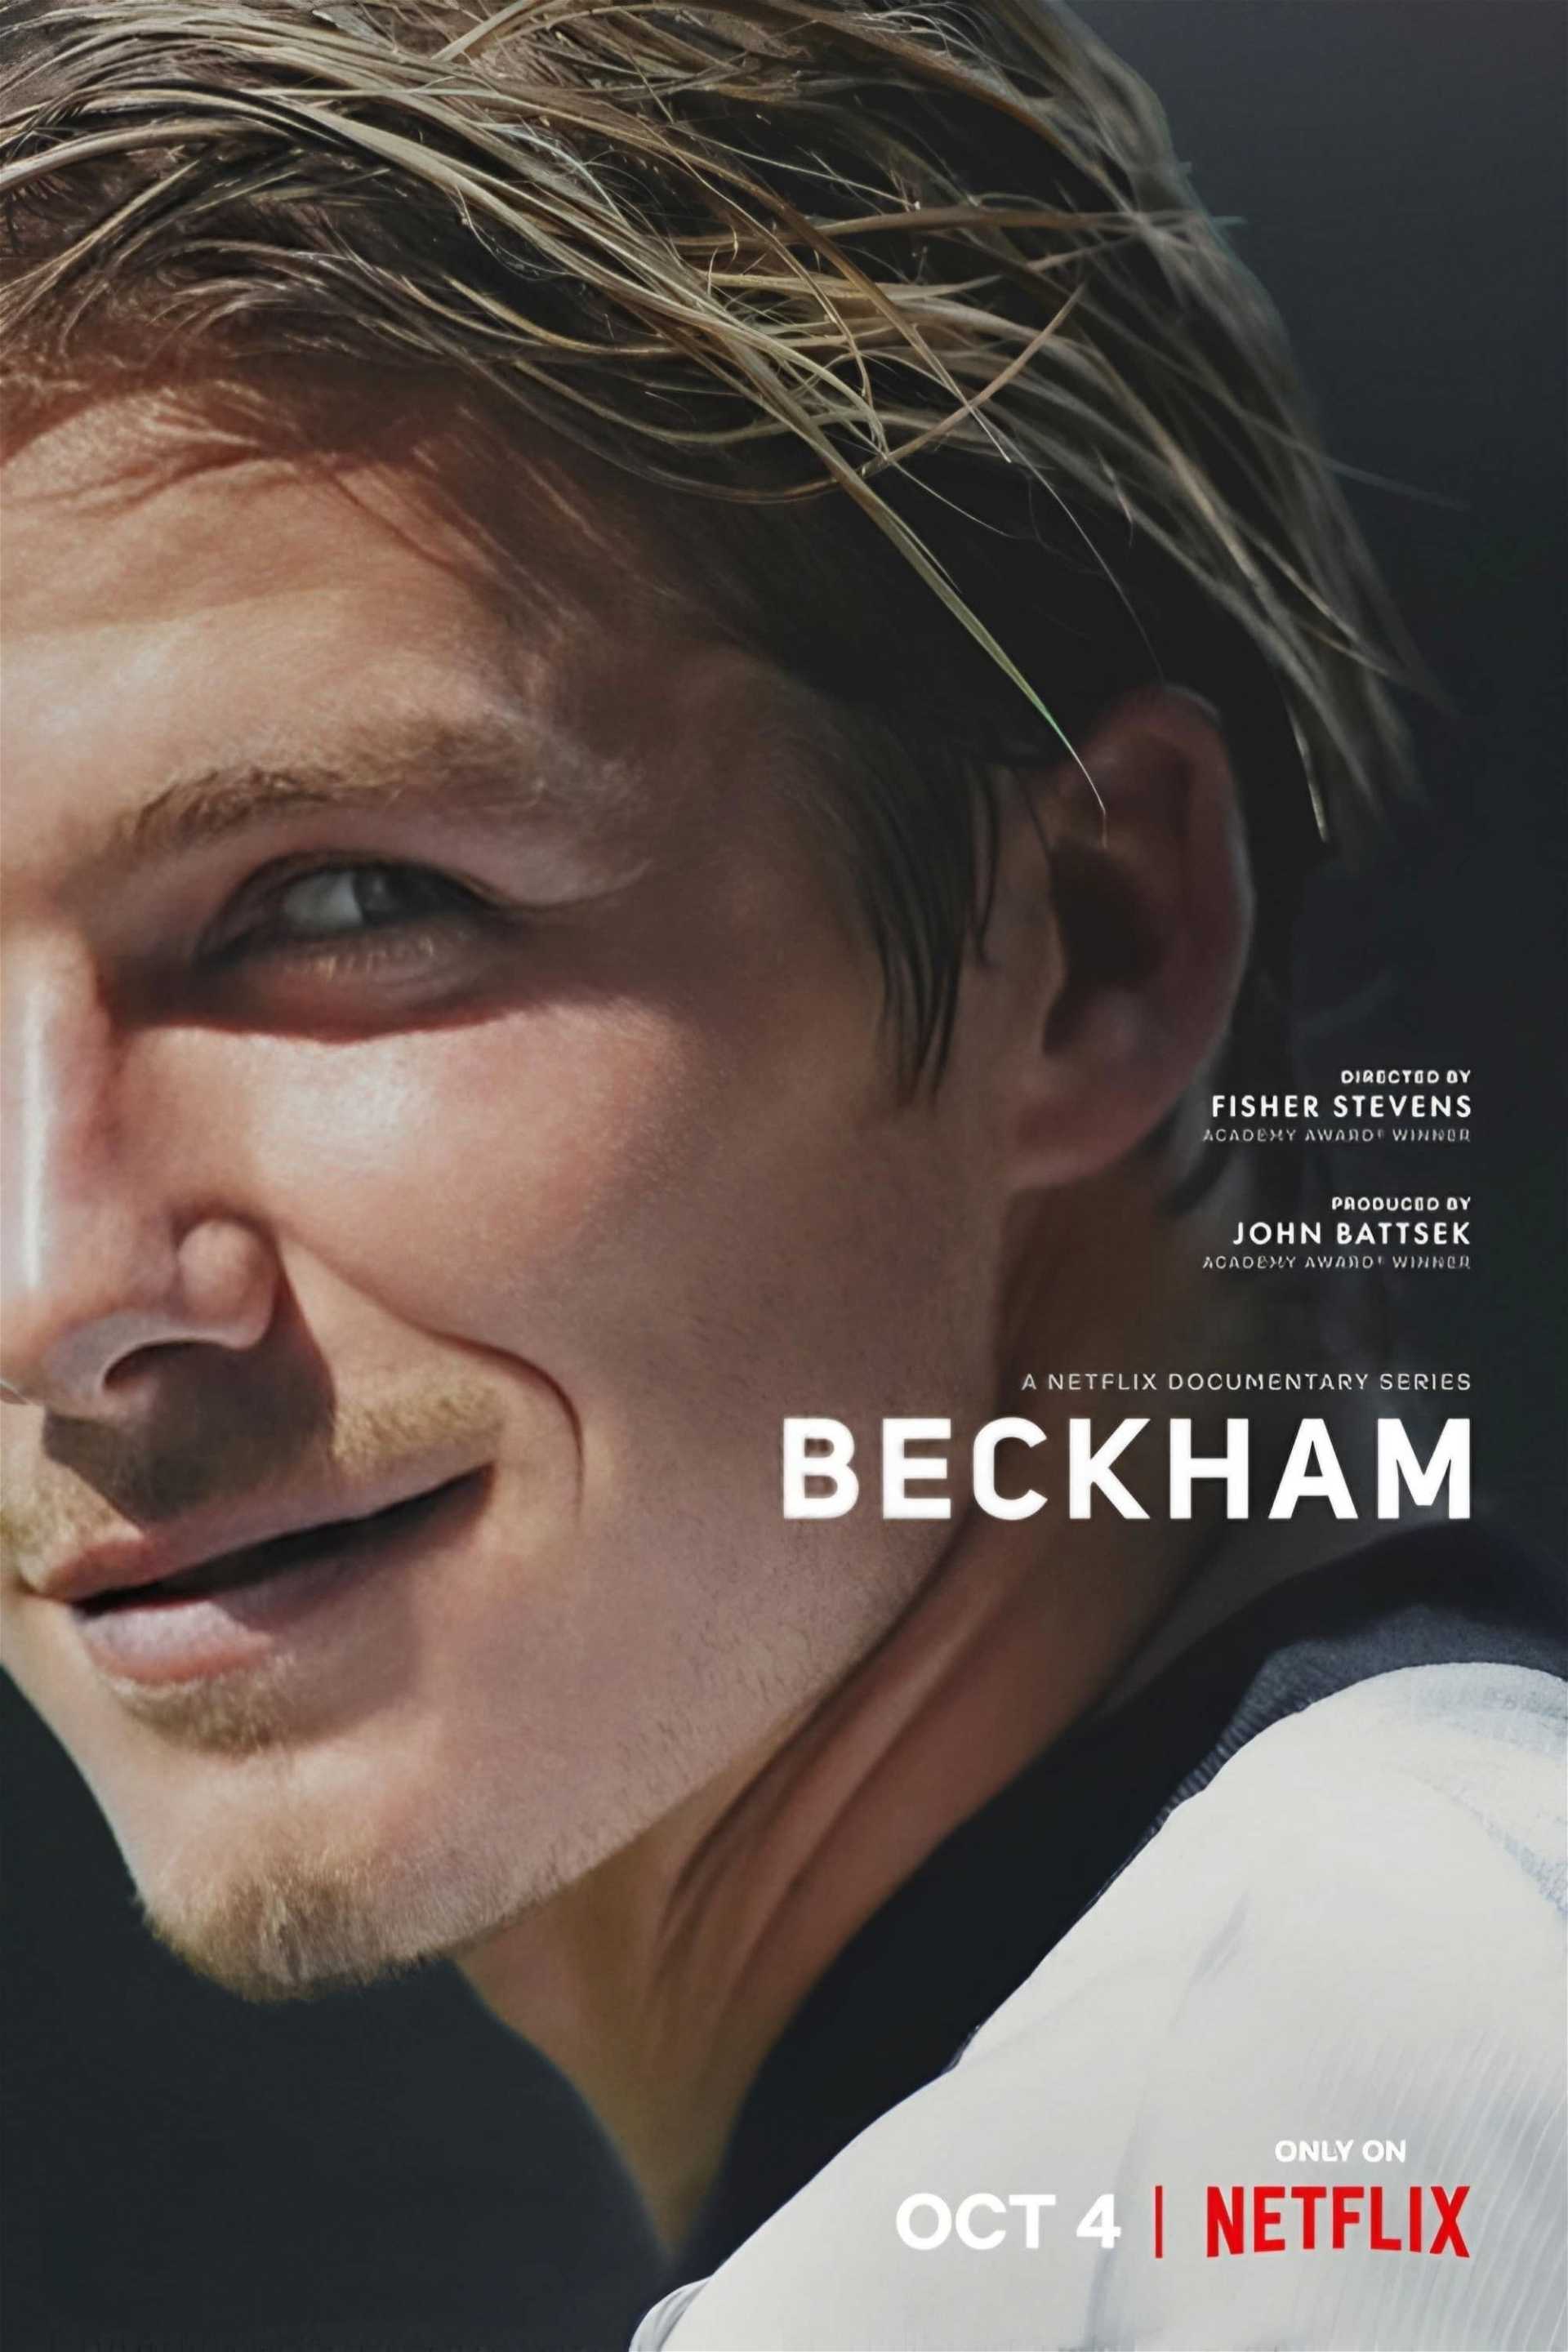 Beckham in streaming